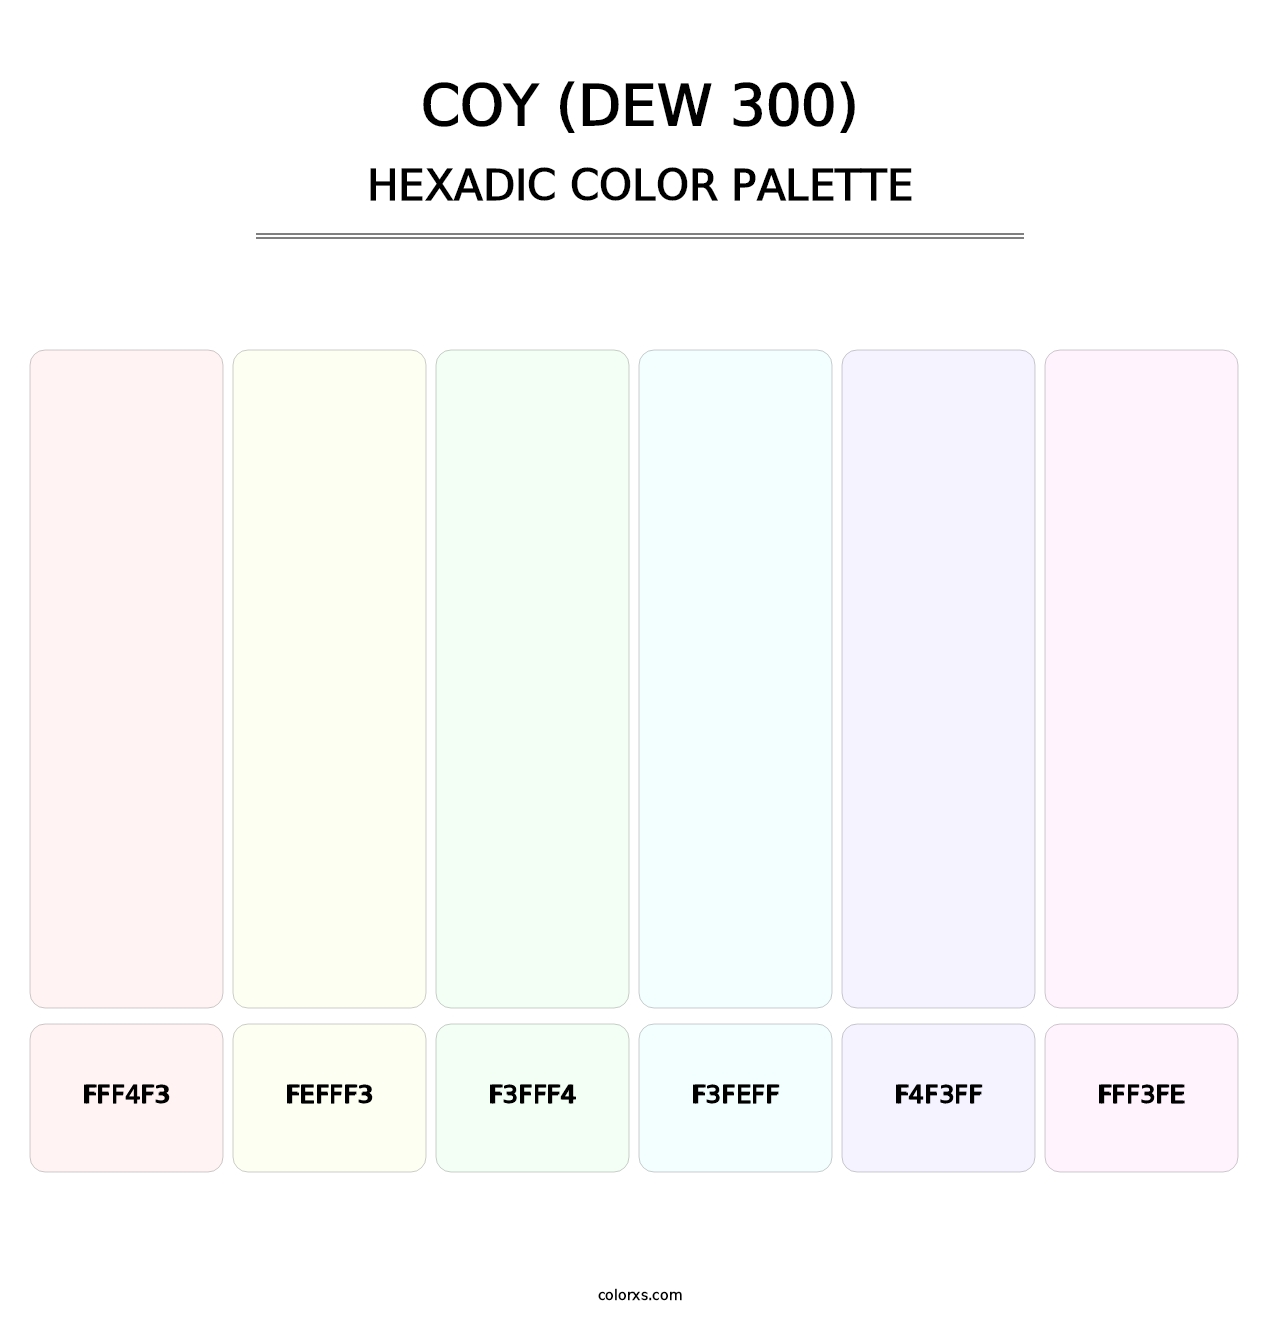 Coy (DEW 300) - Hexadic Color Palette